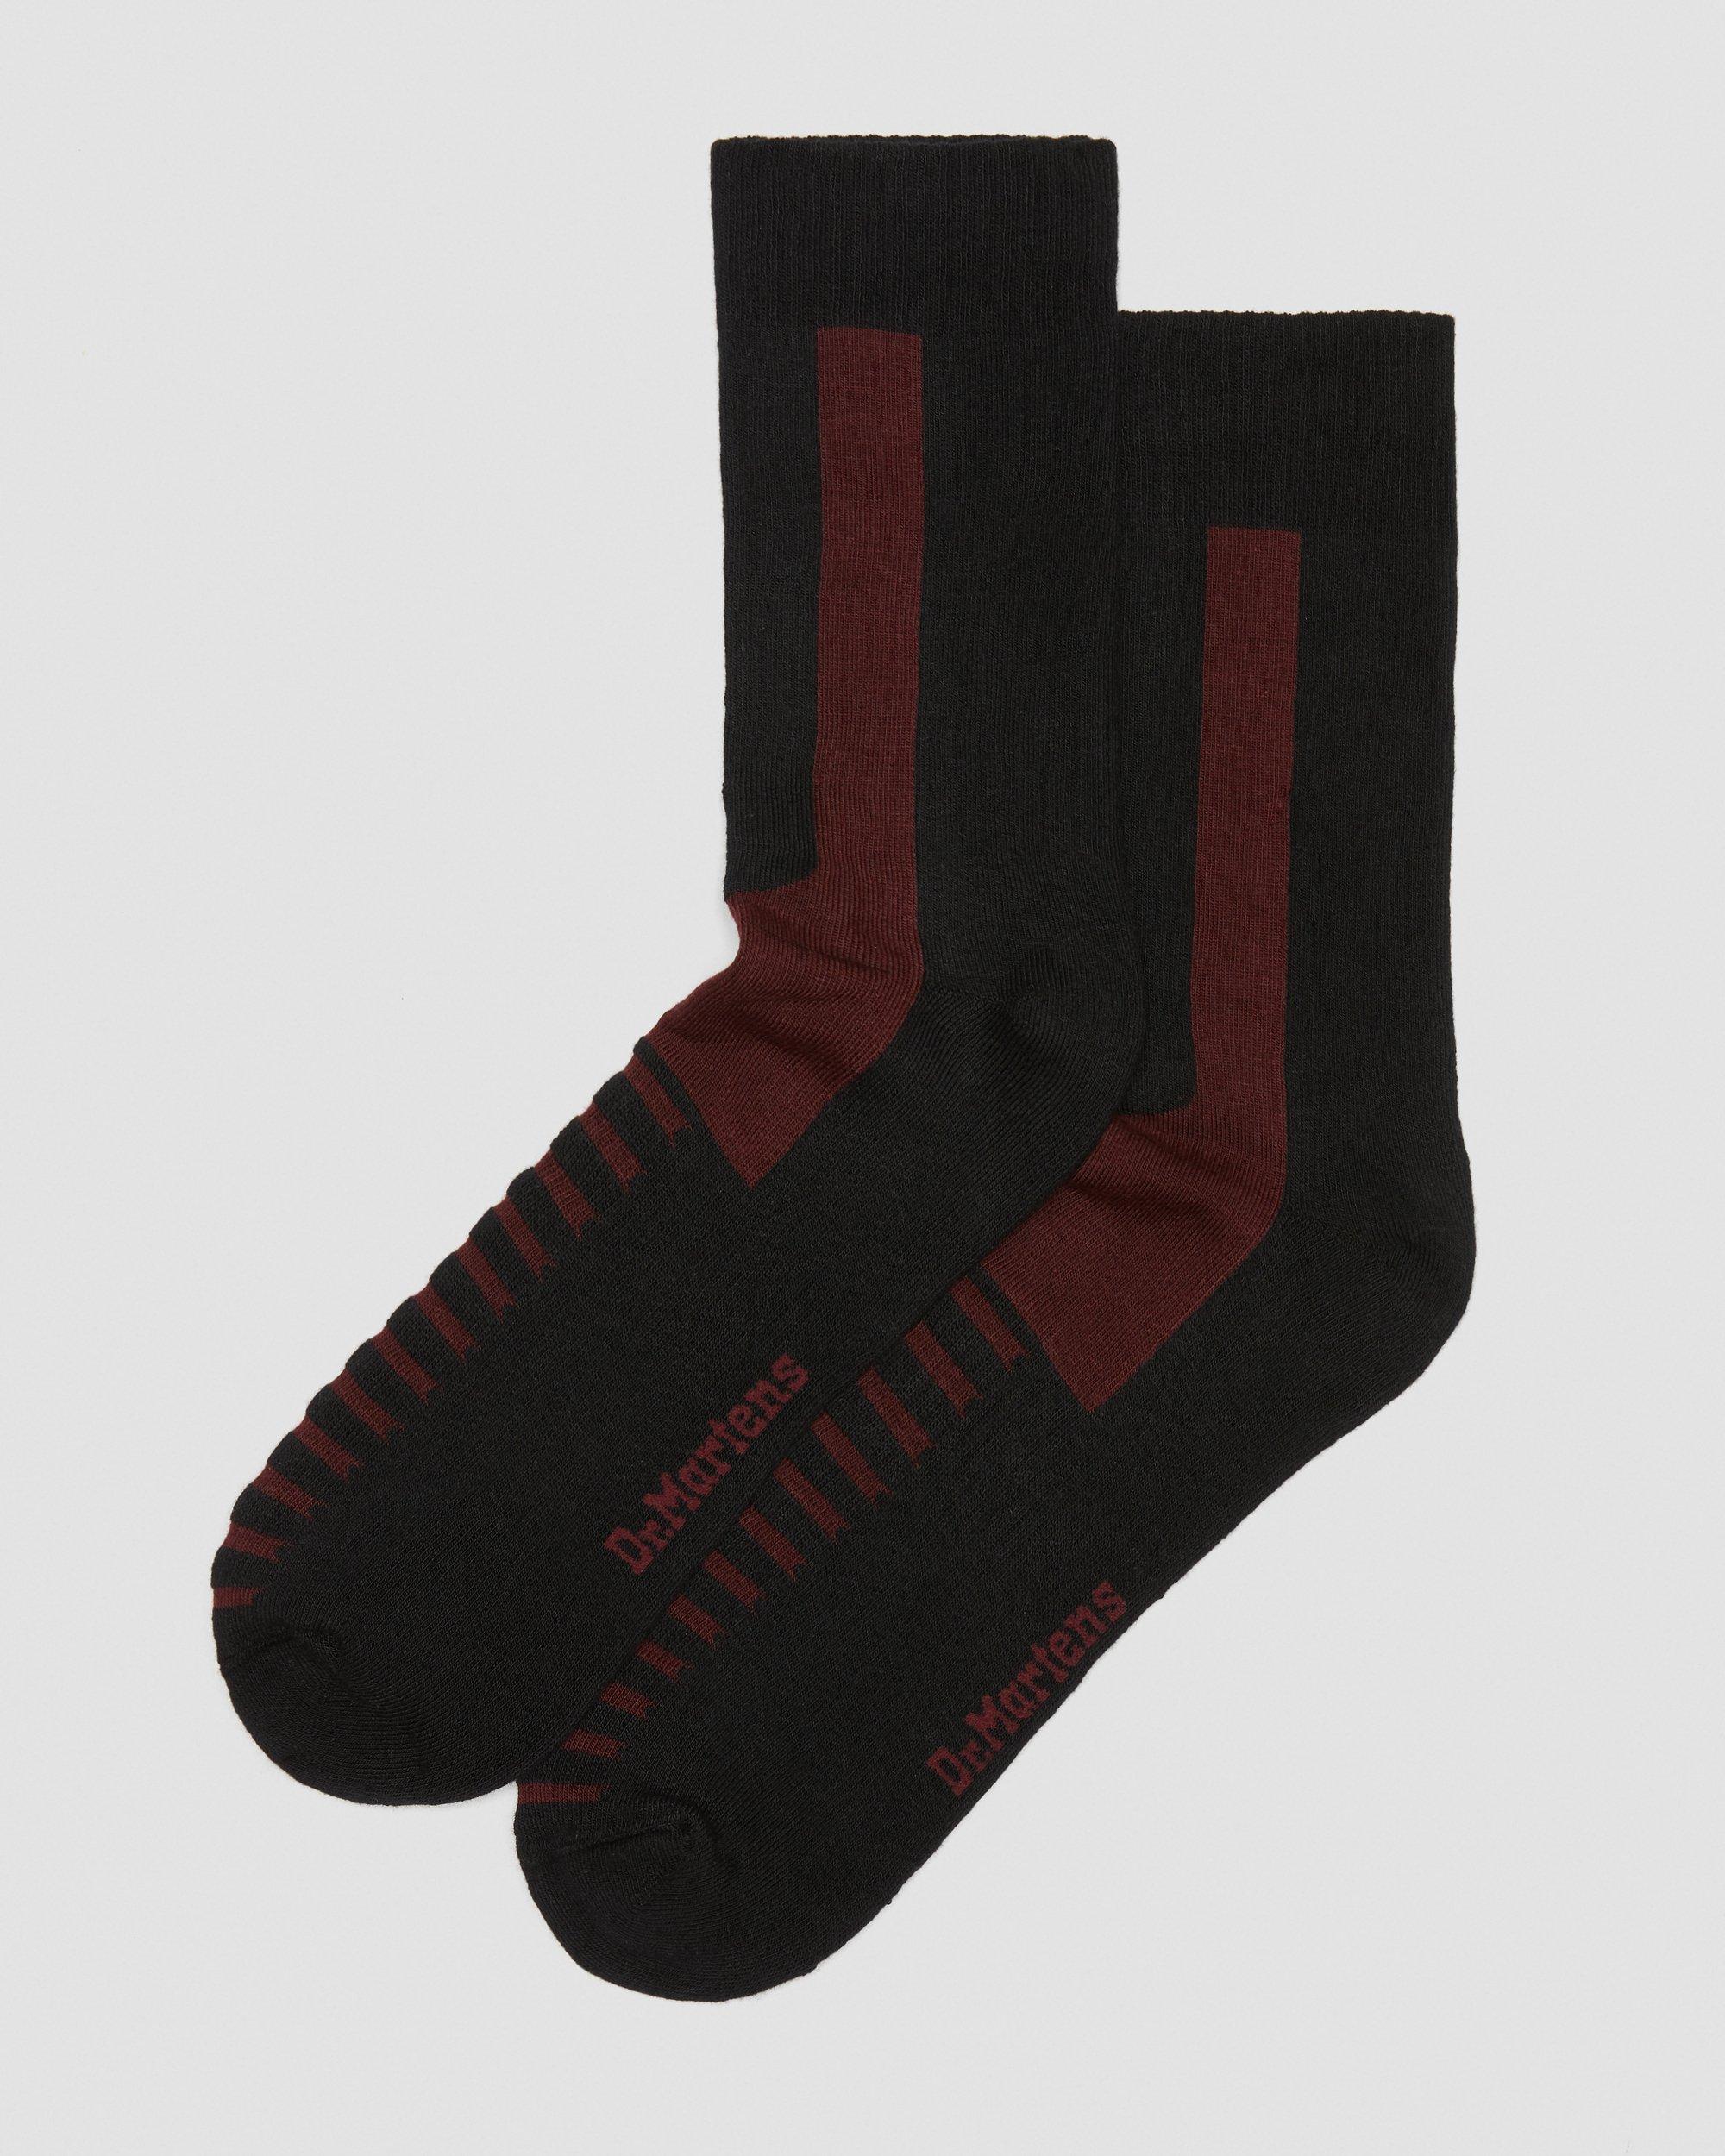 Double Doc Cotton Blend Socks in Black